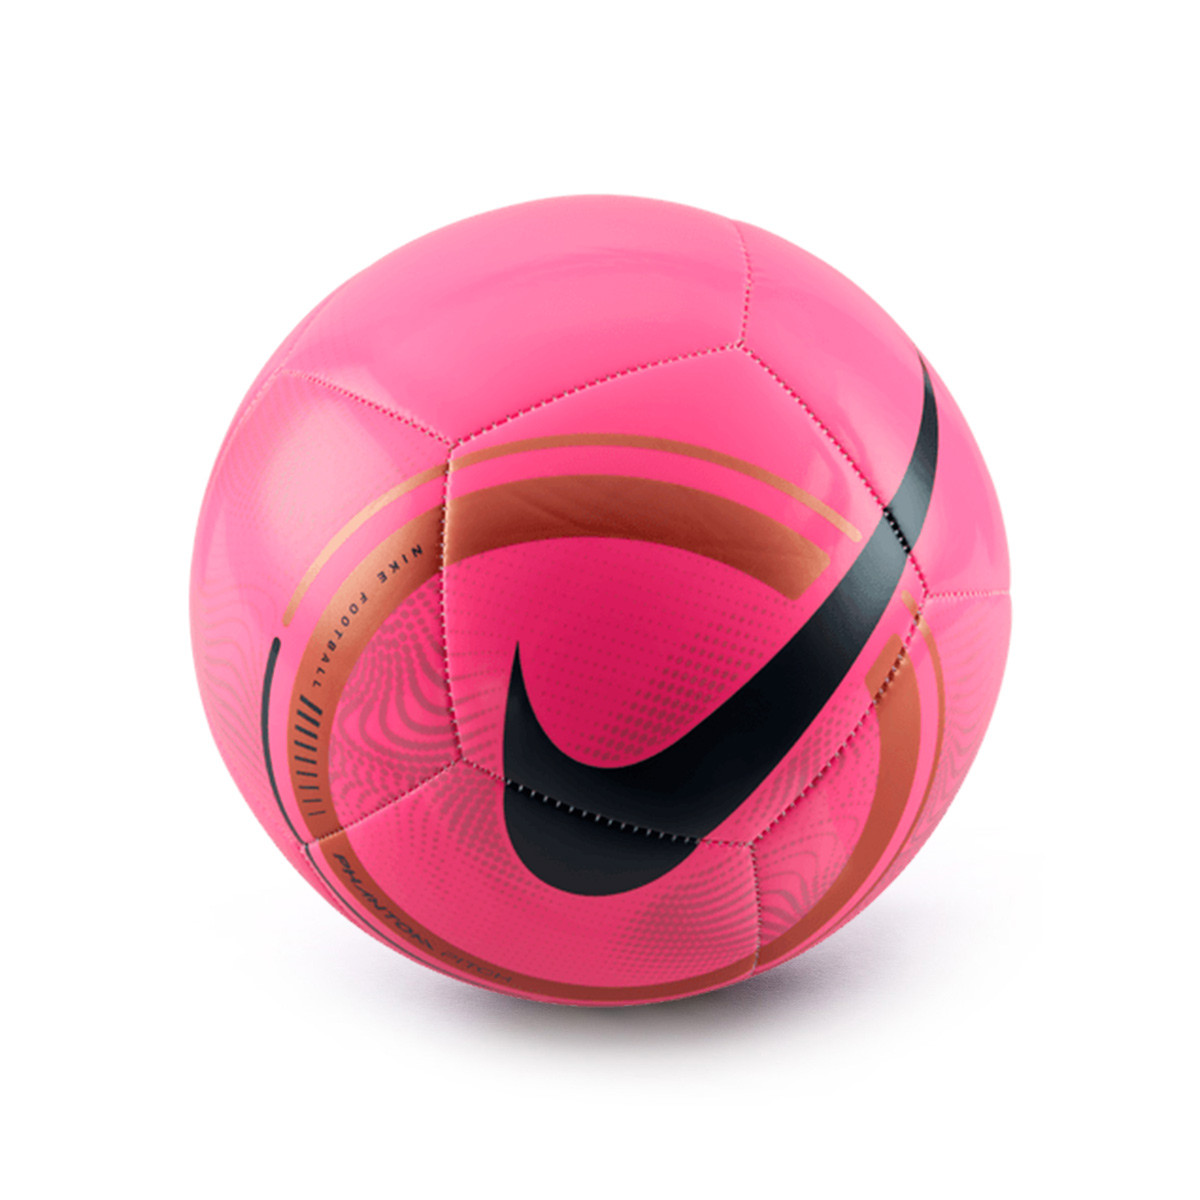 Ballon de Football Nike Pitch - Explosion Rose/Noir Cassé/Blanc